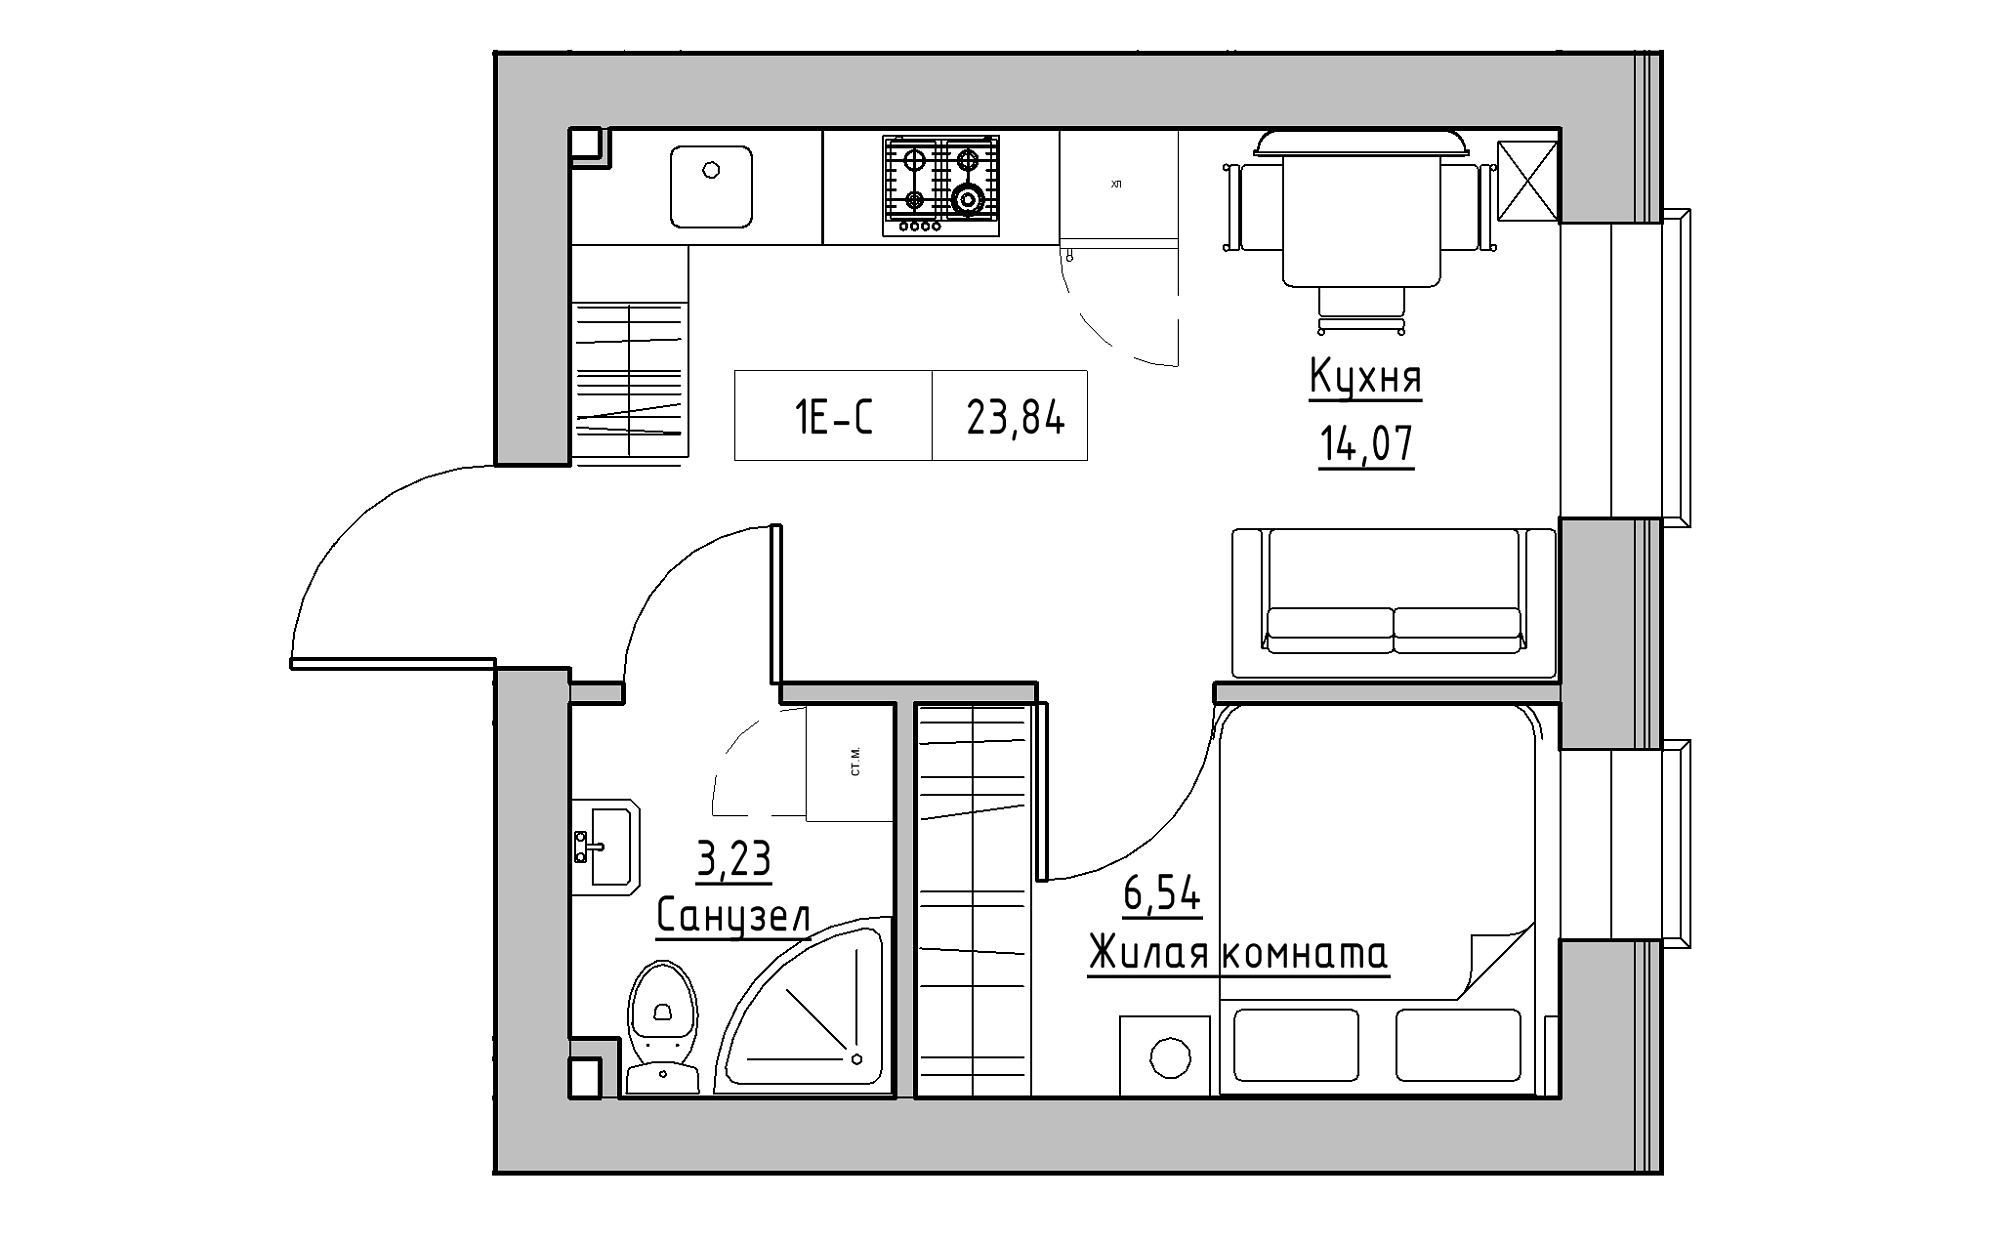 Planning 1-rm flats area 23.84m2, KS-022-02/0011.